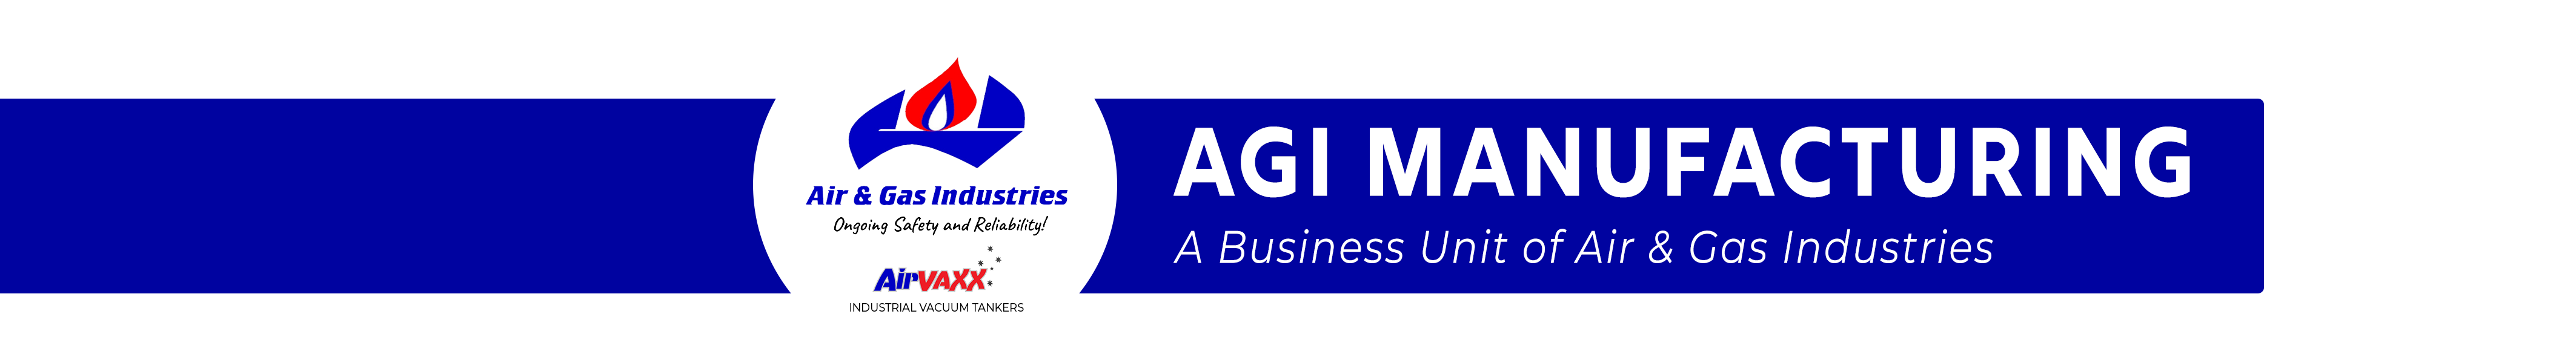 AGI Manufacturing